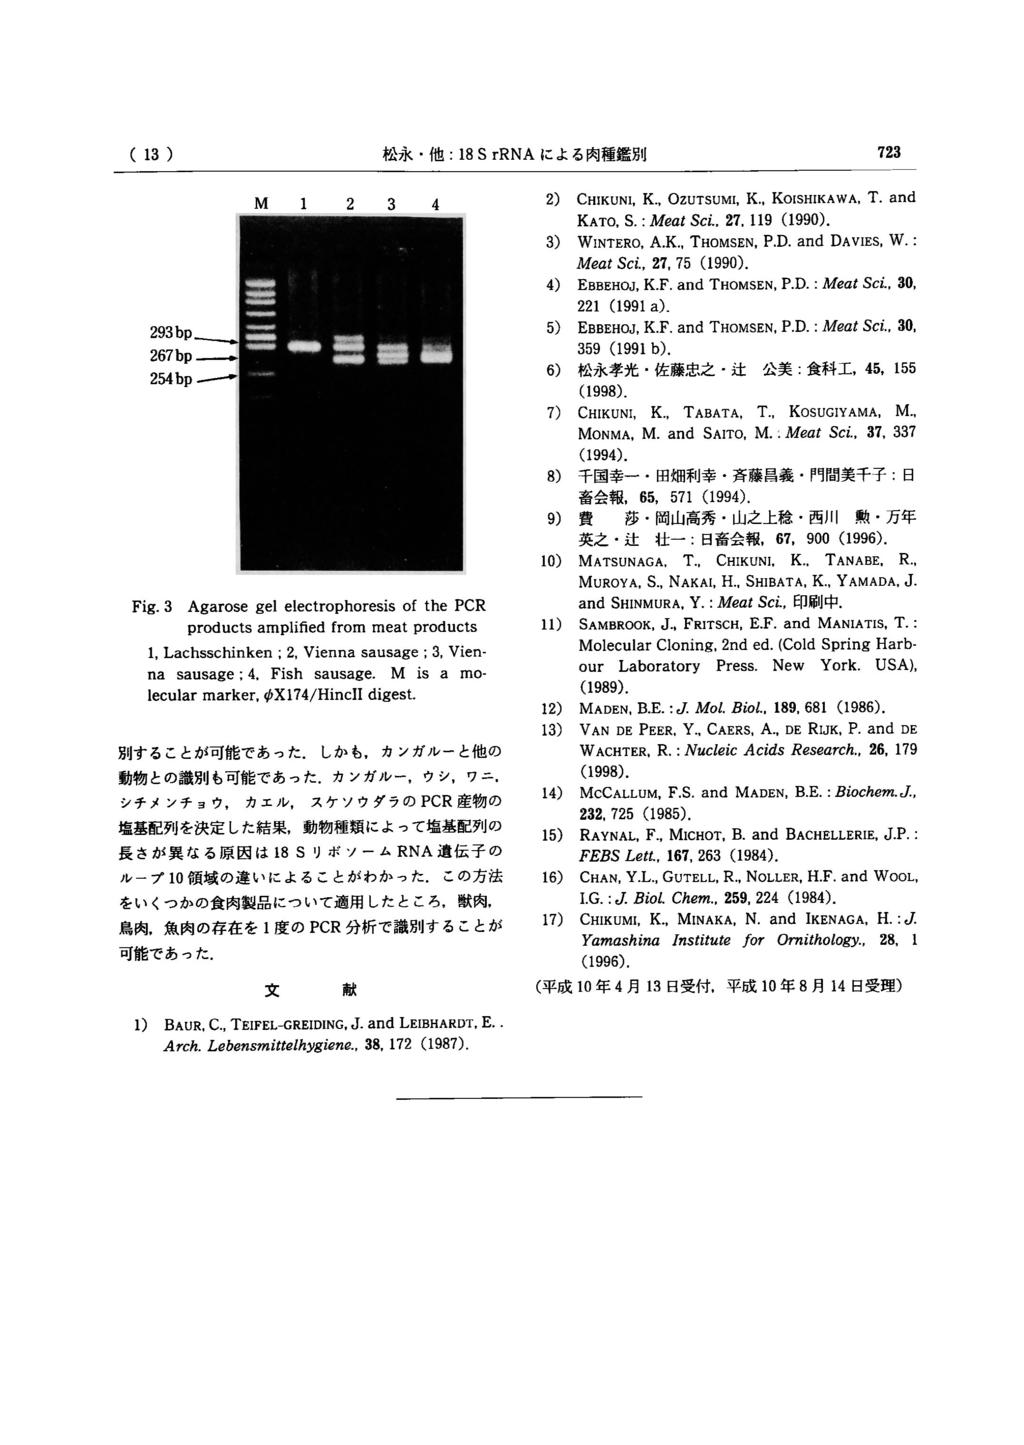 2) CHIKUNI, K., OZUTSUMI, K., KOISHIKAWA, T. and KATO, S.: Meat Sci., 27, 119 (1990). 3) WINTERO, A.K., THOMSEN, P.D. and DAVIES, W. Meat Sci., 27, 75 (1990). 4) EBBEHOJ, K.F. and THOMSEN, P.D. : Meat Sci.